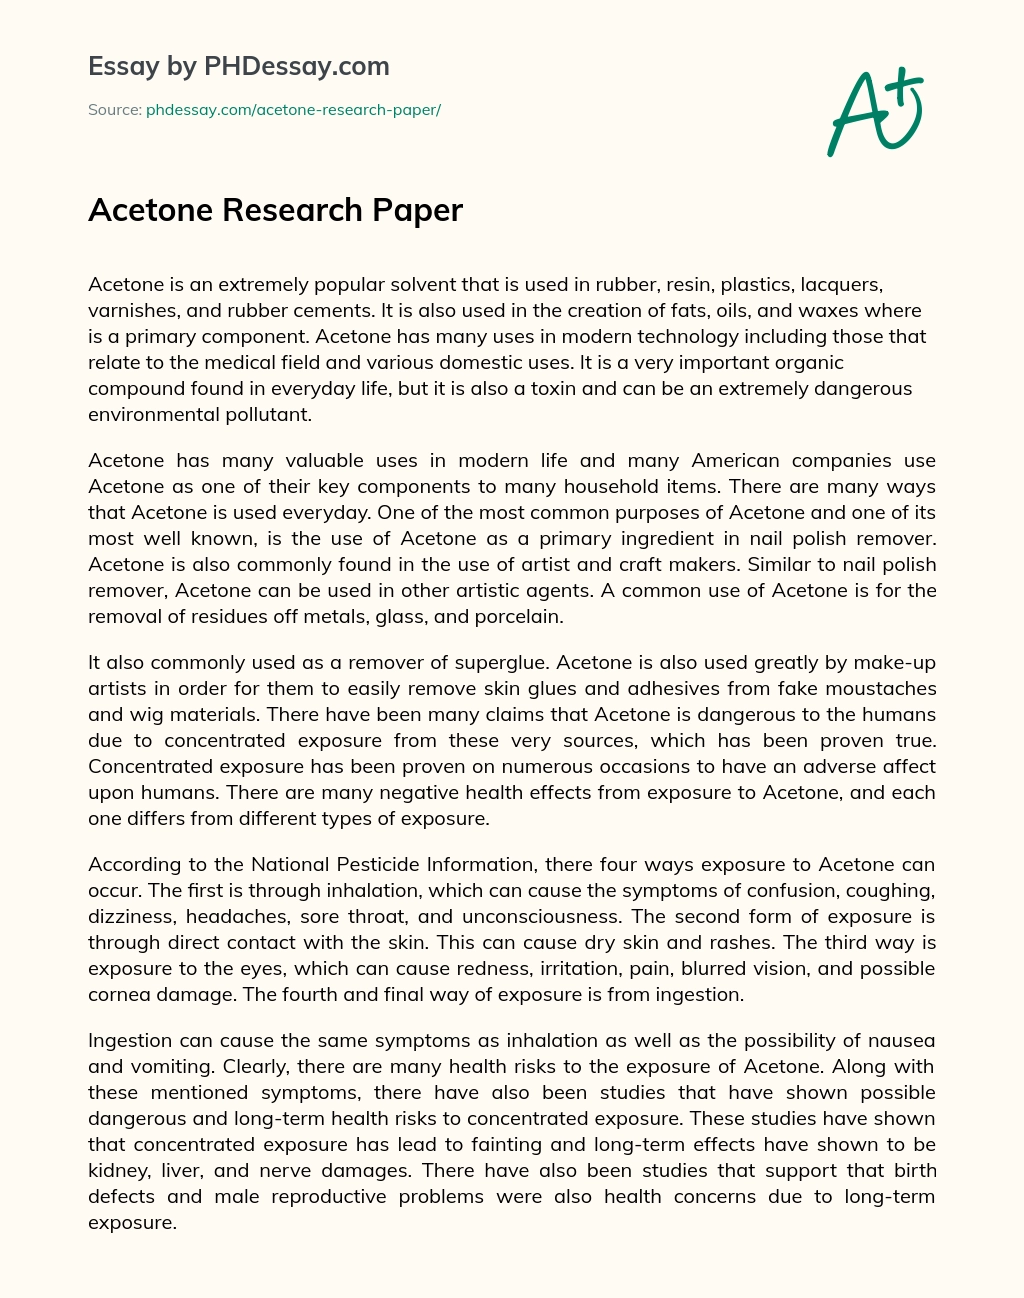 Acetone Research Paper essay